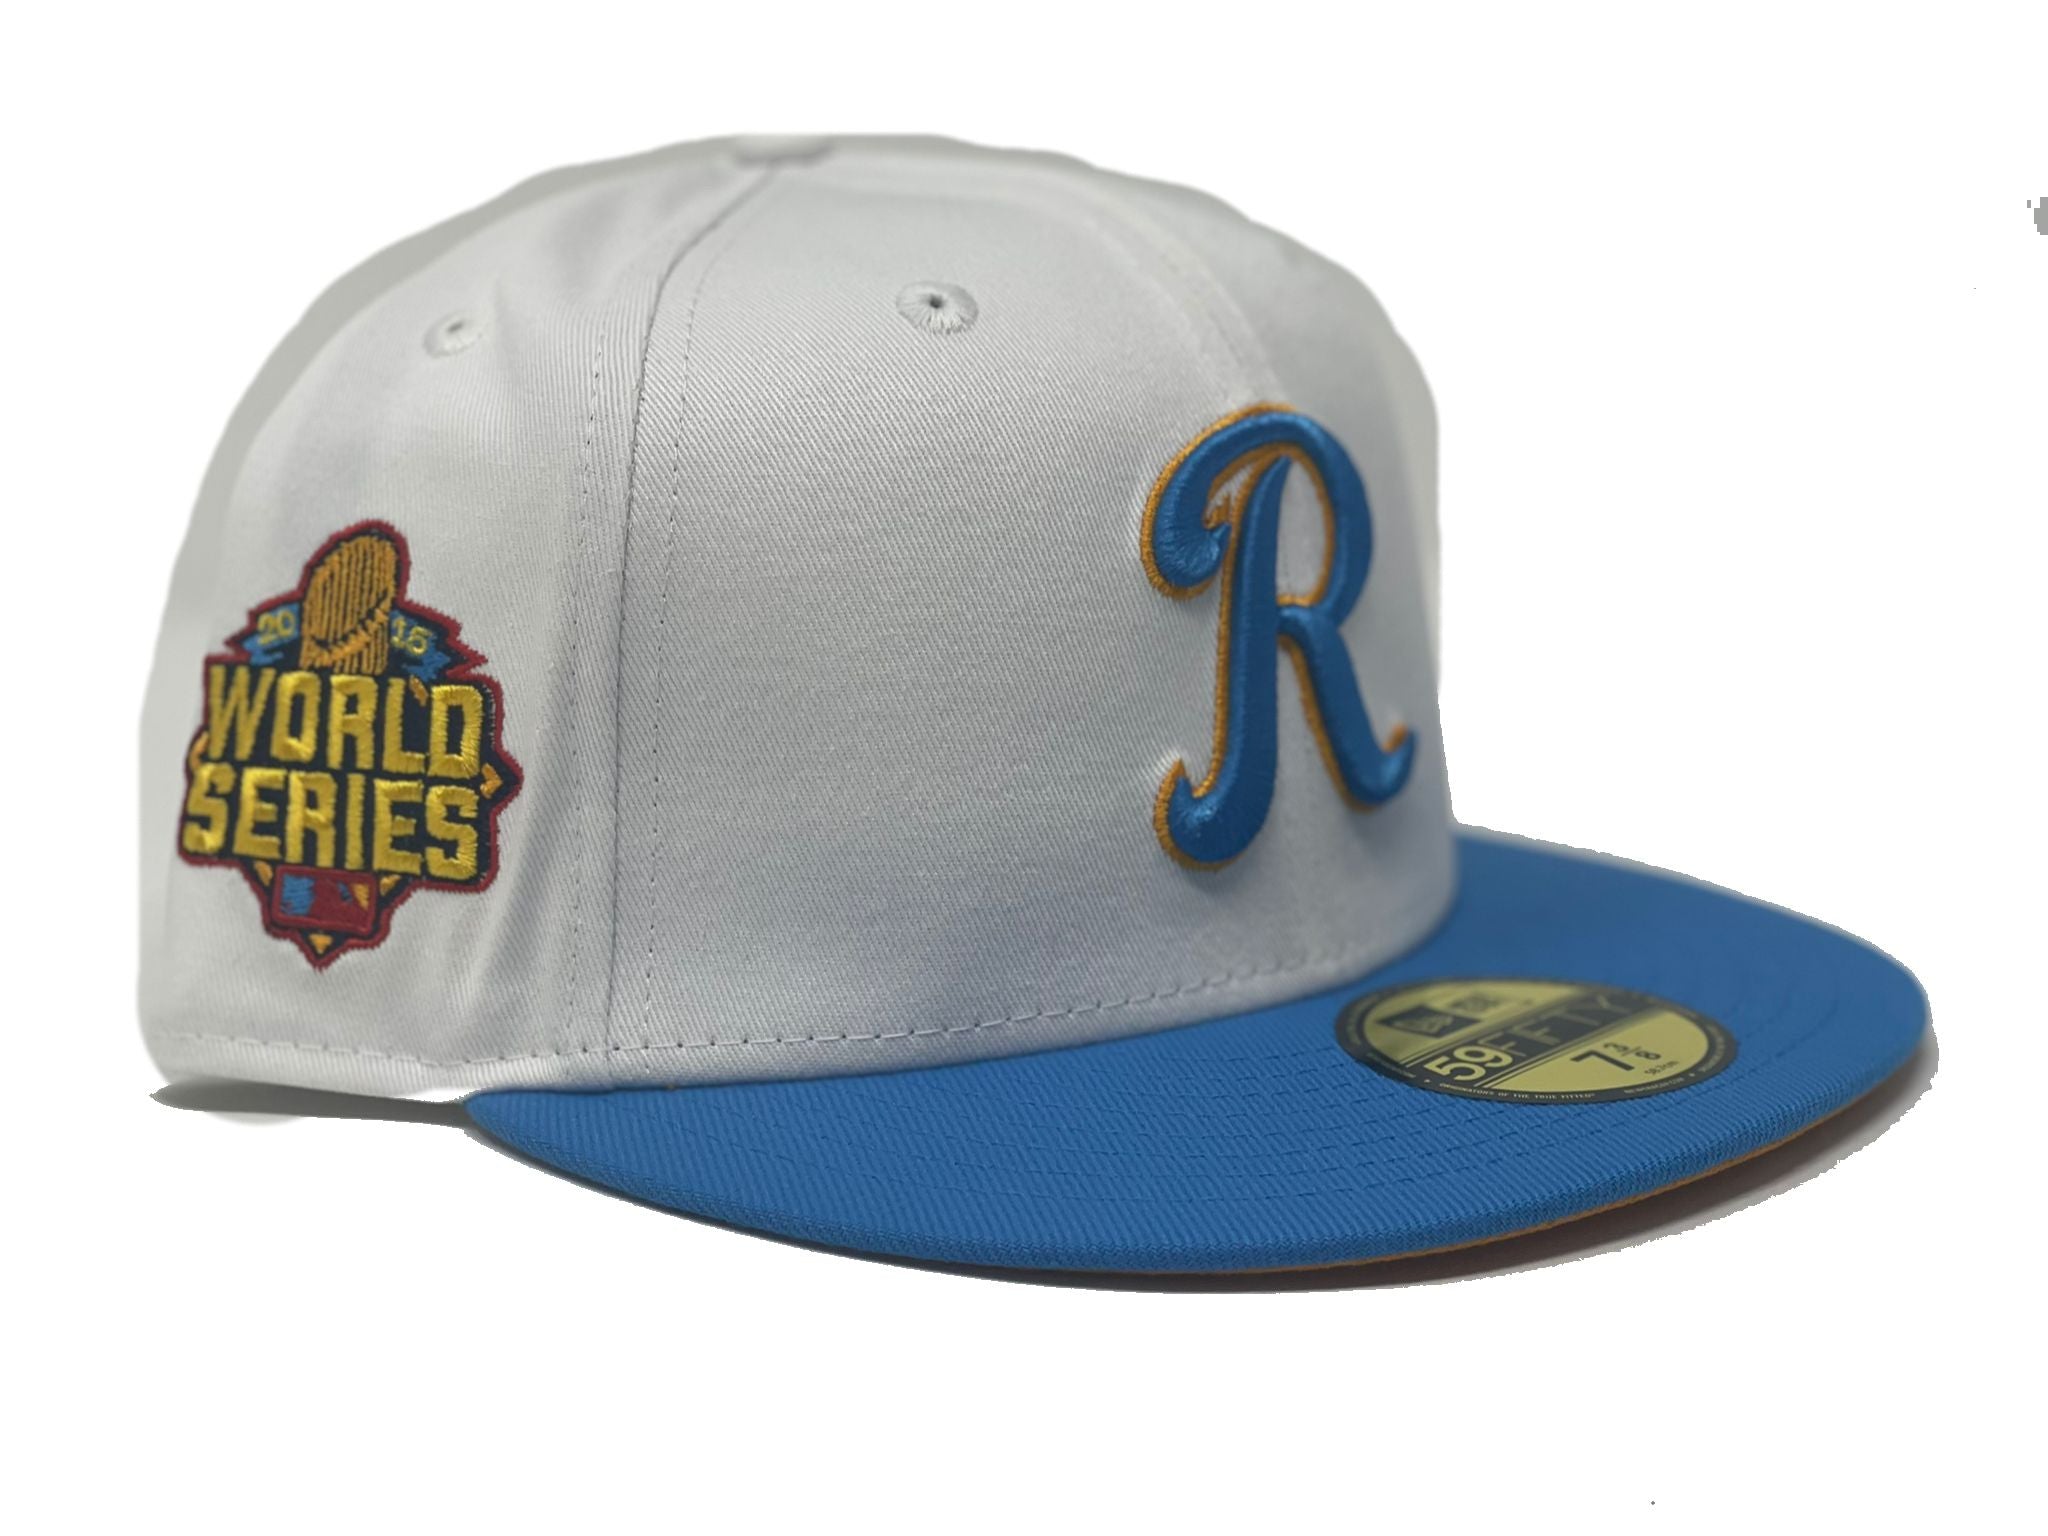 Baseball Kansas City Royals Customized Number Kit For 2017-2020